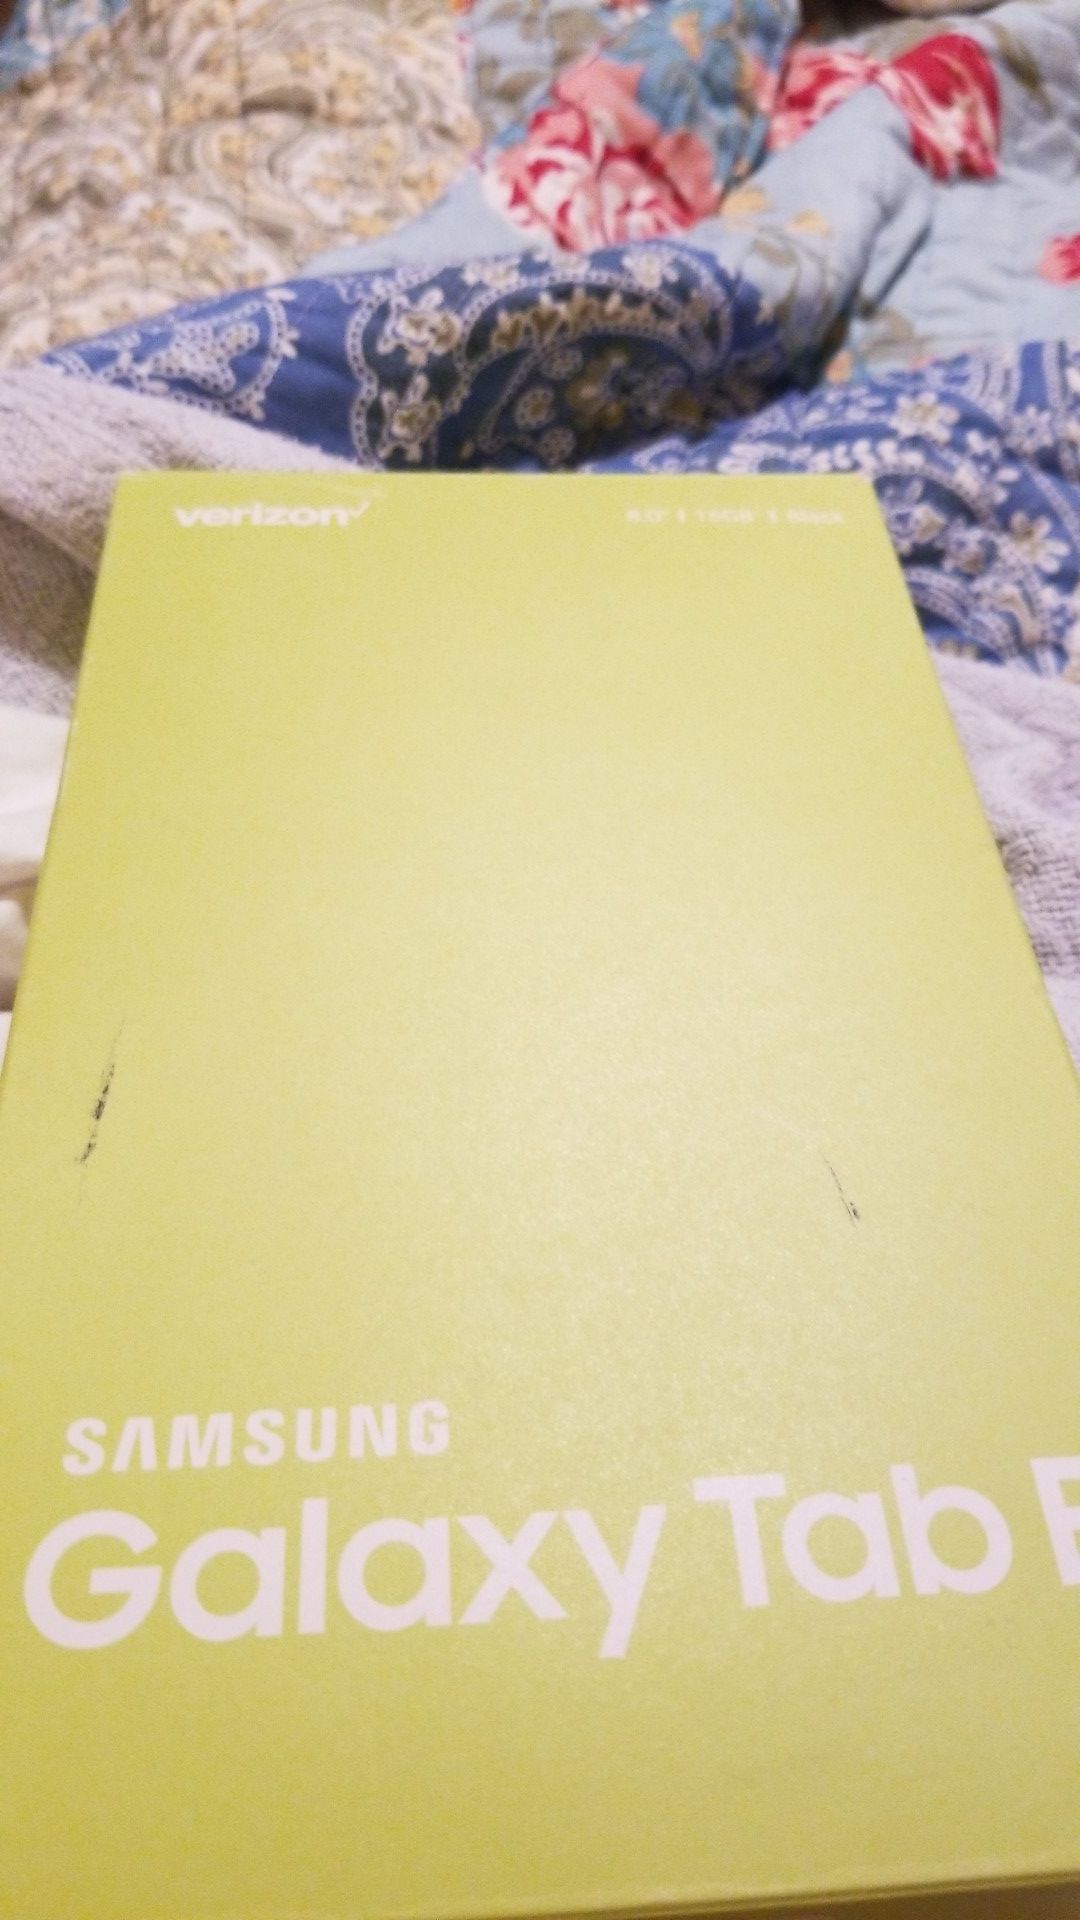 Samsung galaxy Tab E..new in box